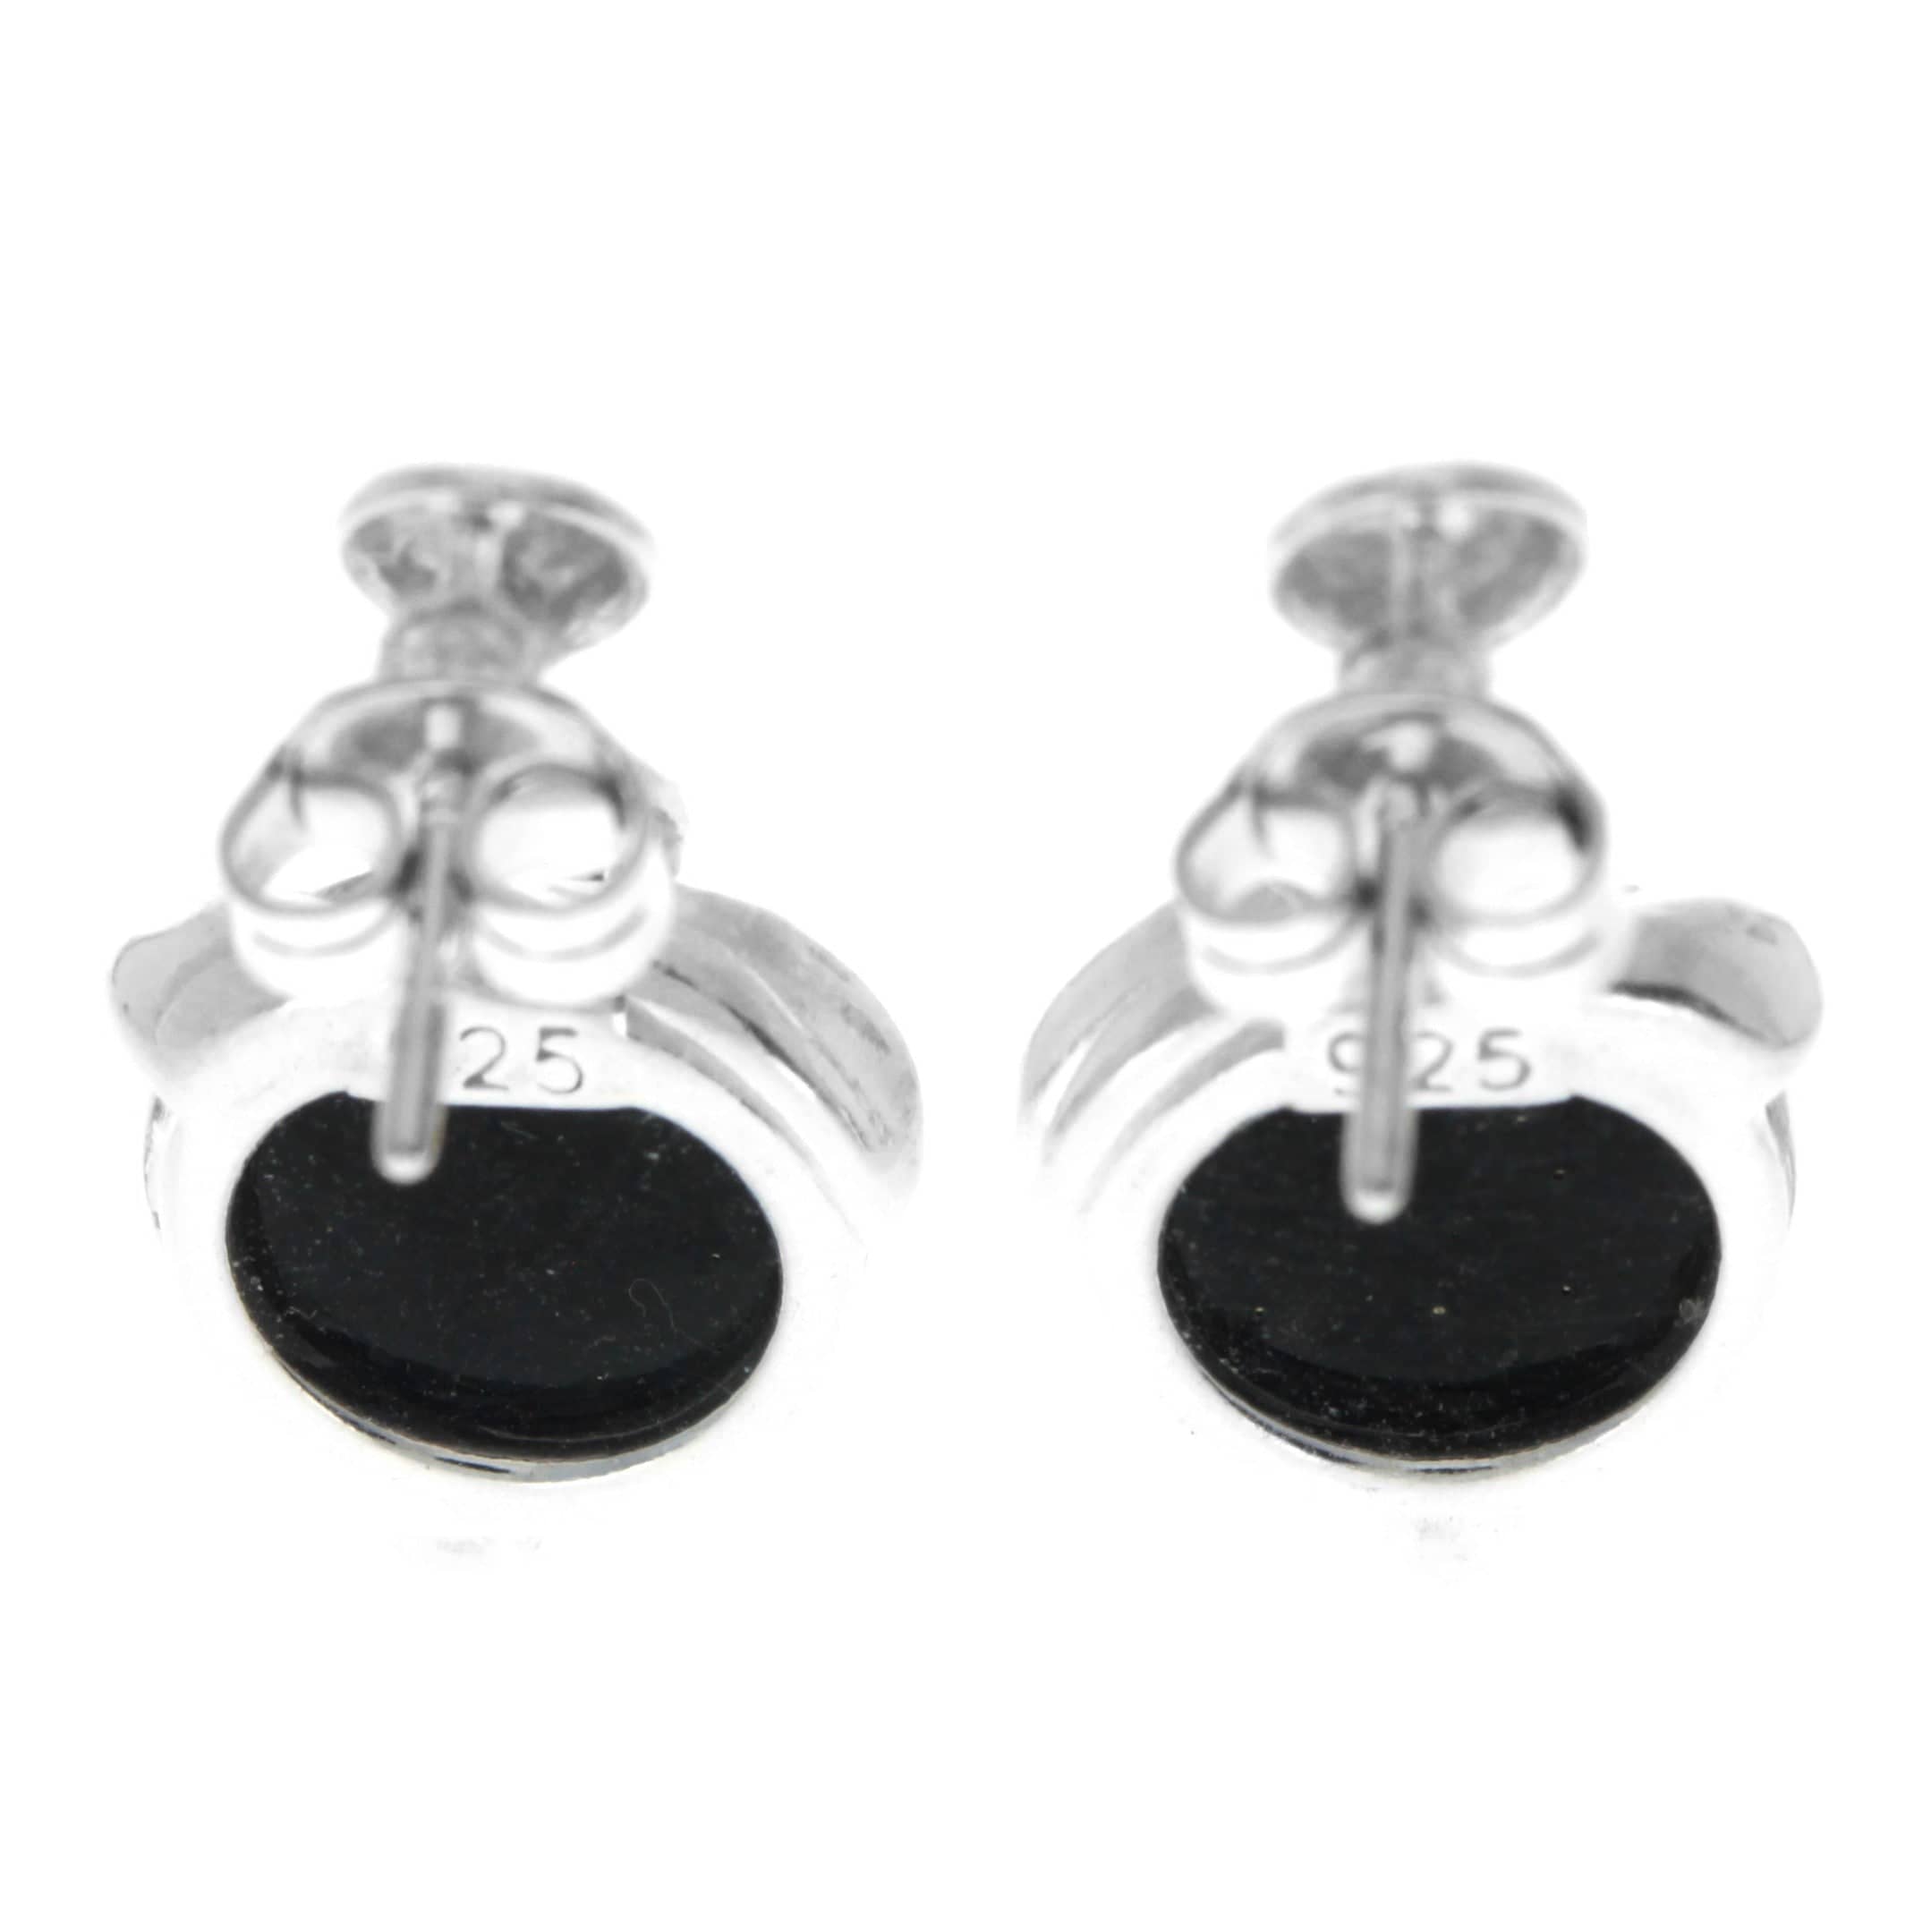 925 Sterling Silver & Genuine Baltic Amber Modern Studs Dangling Earrings - GL1019